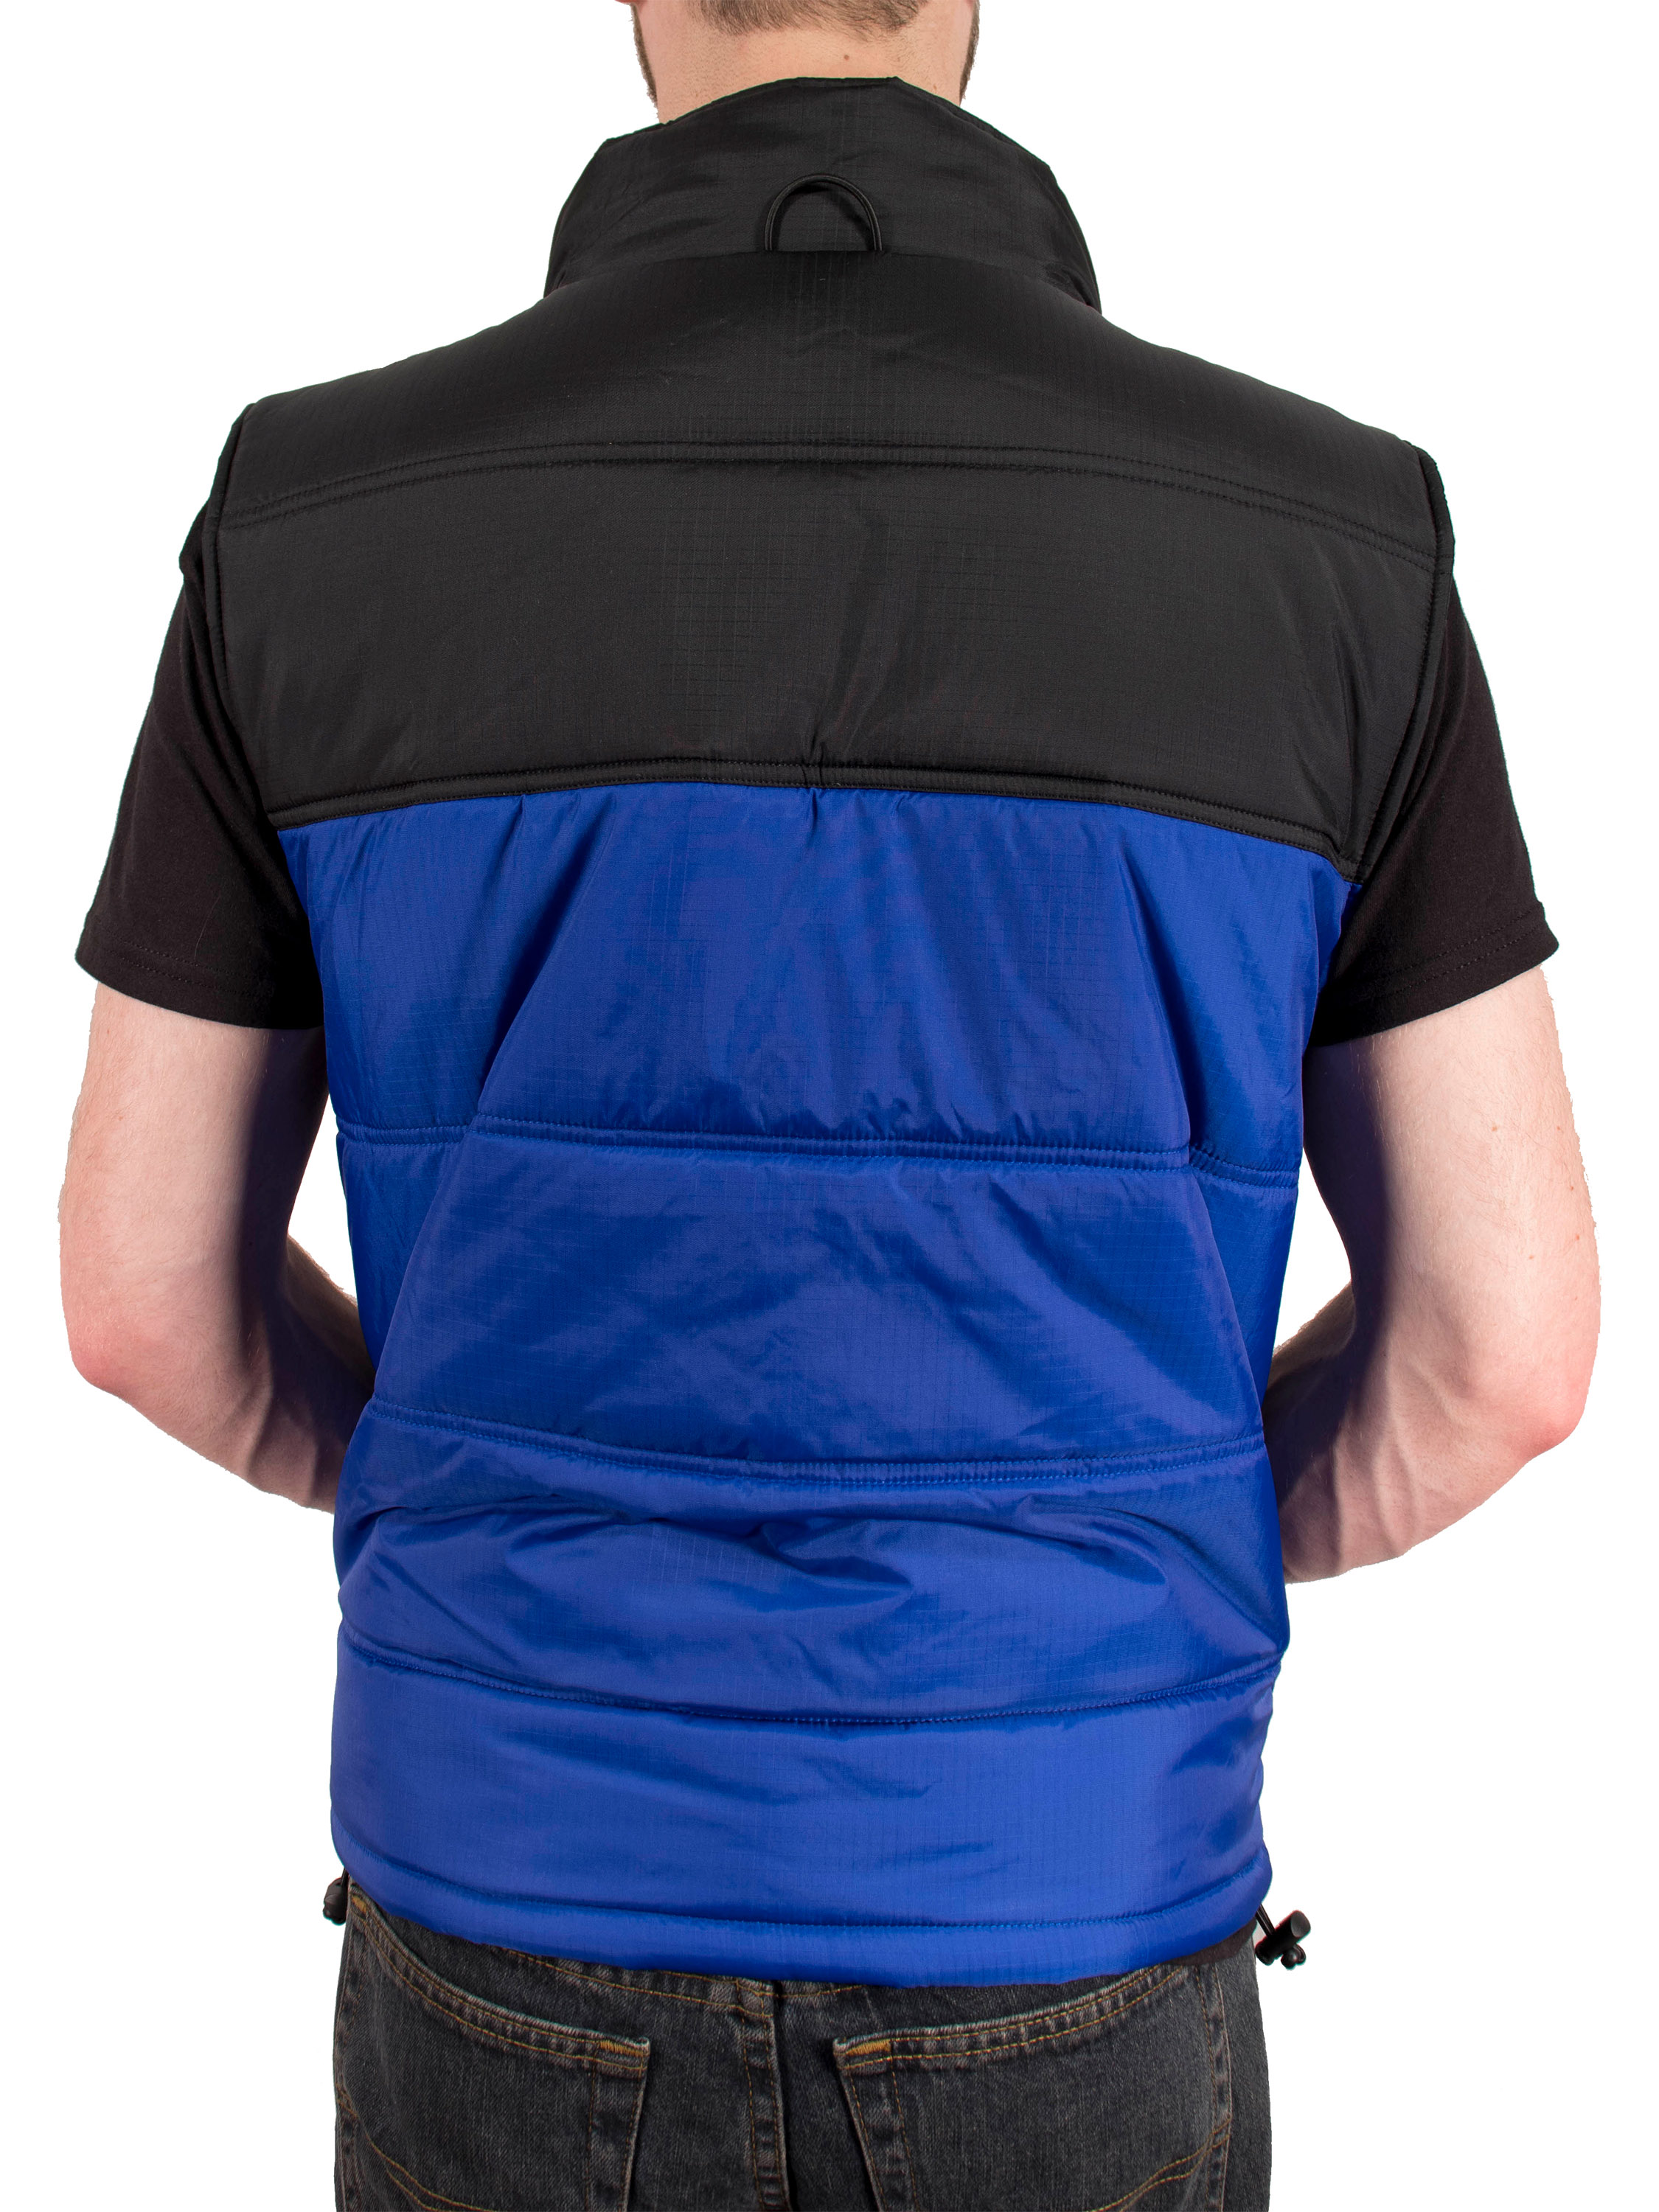 Freeze Defense Warm Men's 3in1 Winter Jacket Coat Parka & Vest (Small, Blue) - image 9 of 10